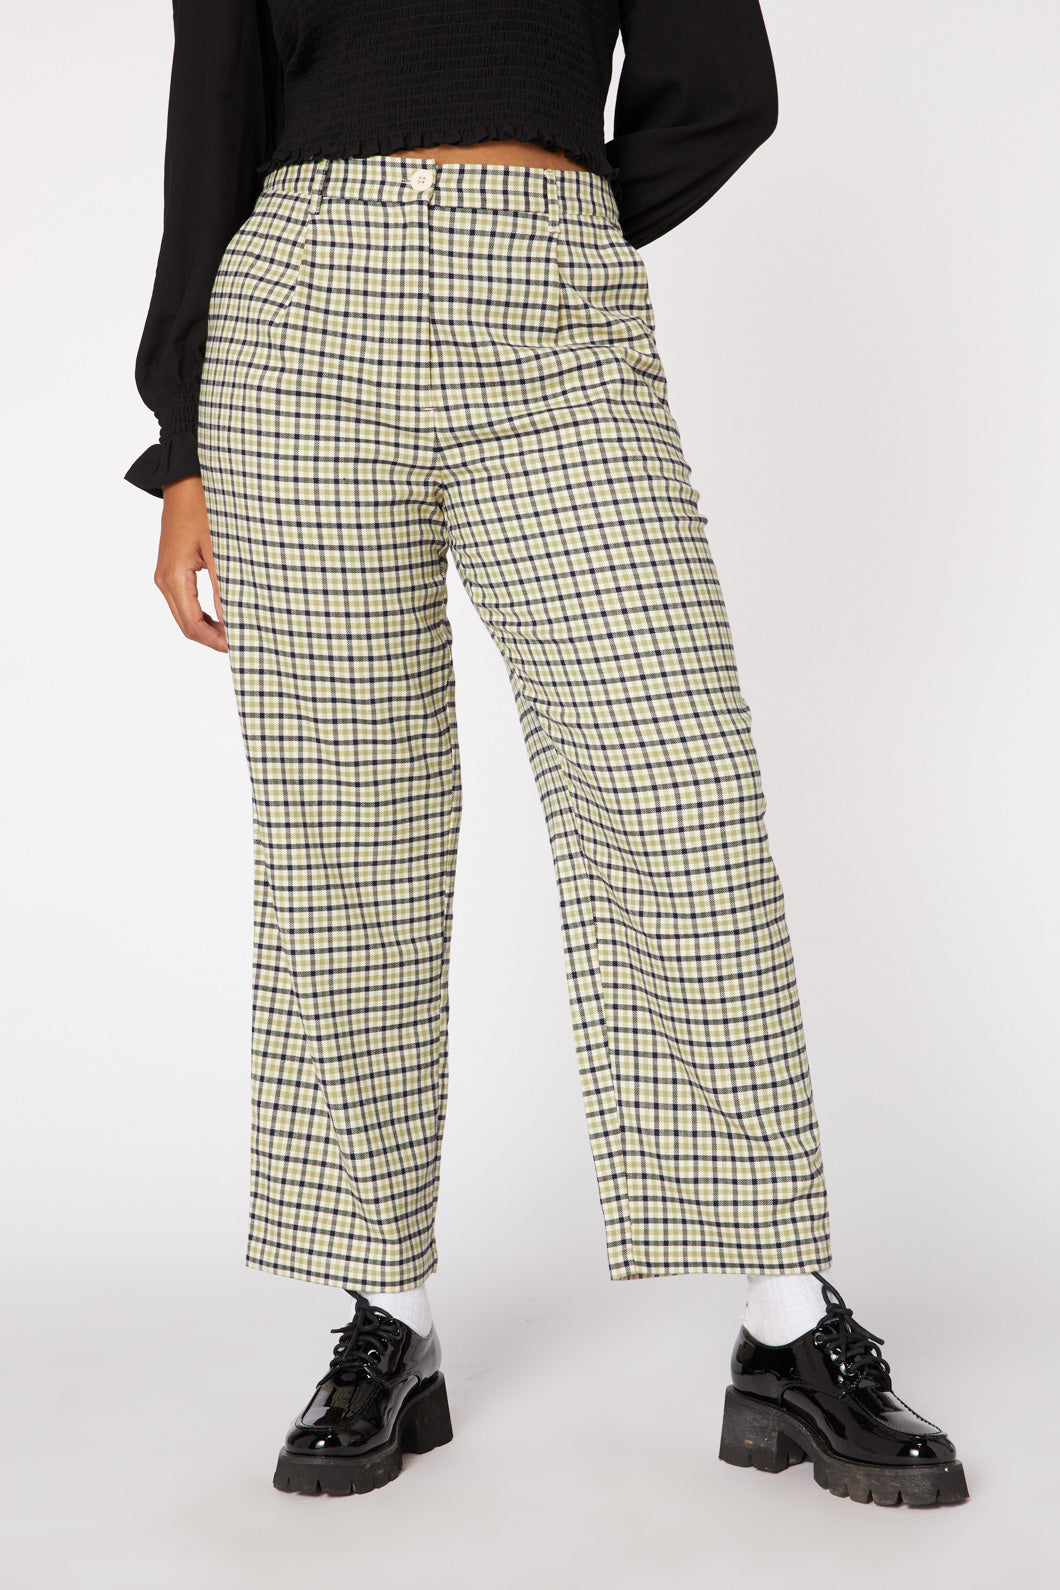 Buy  tan checkered pants  Very cheap 